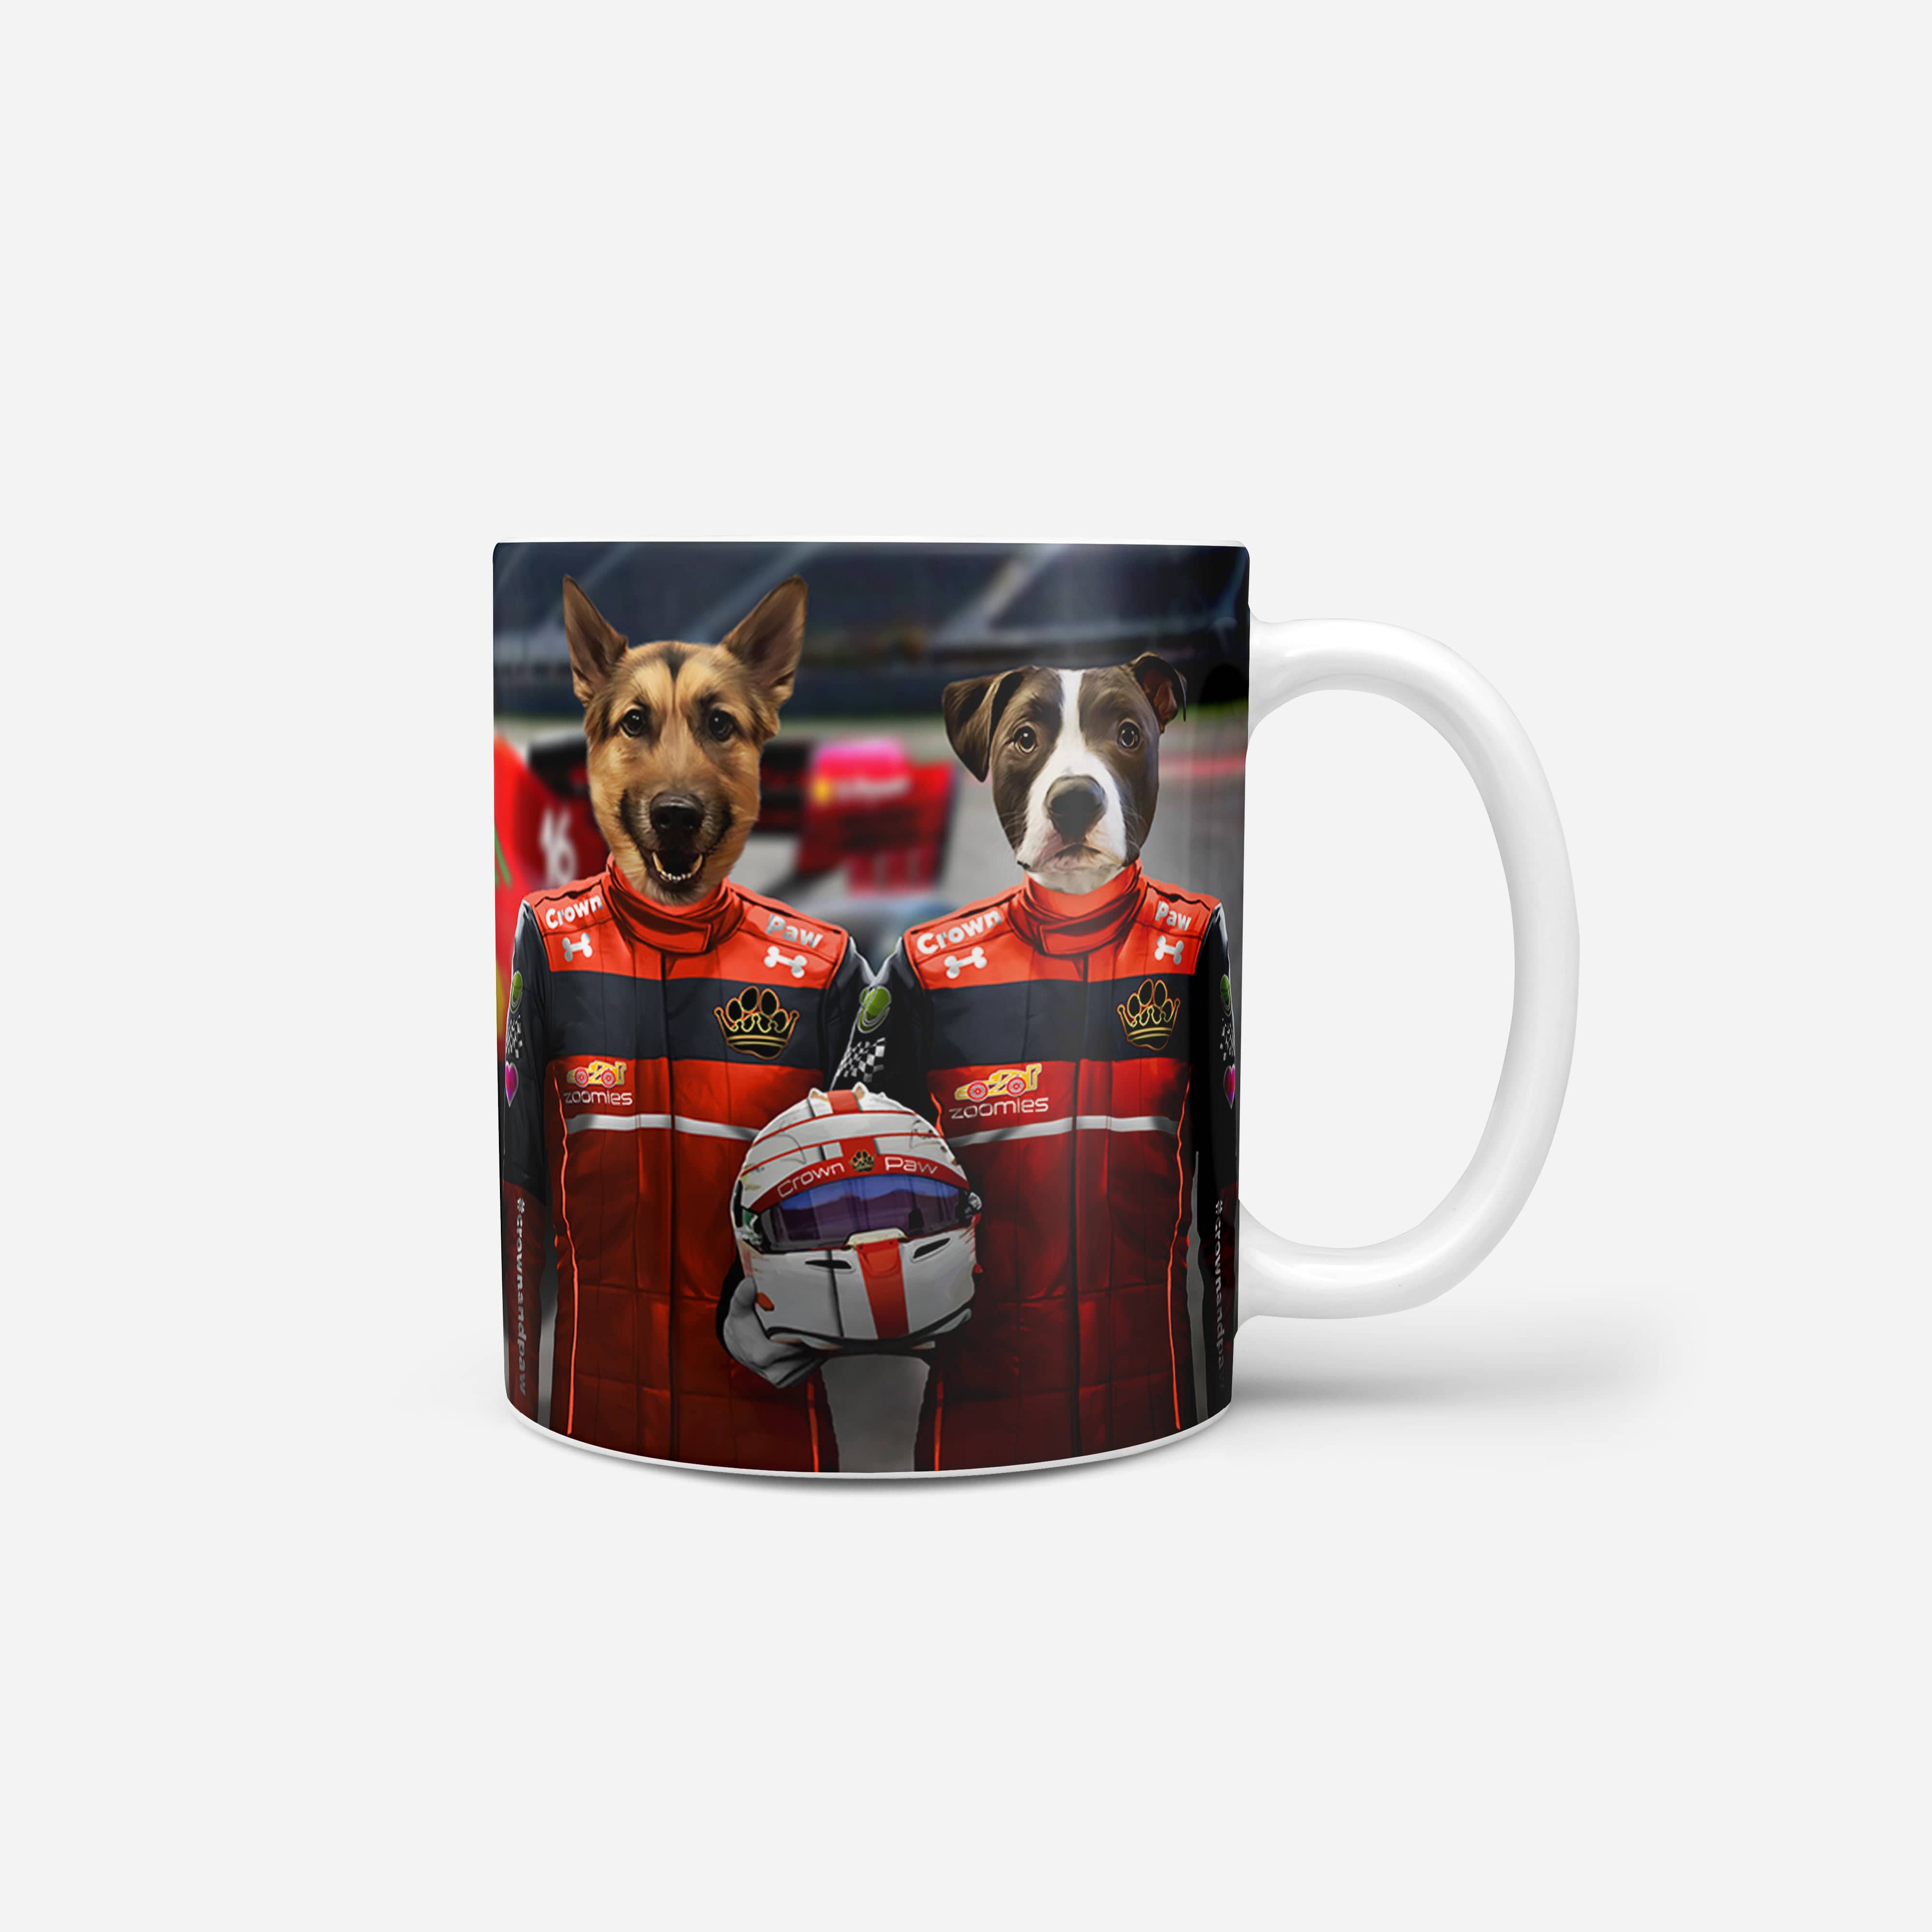 The Red Drivers - Custom Mug